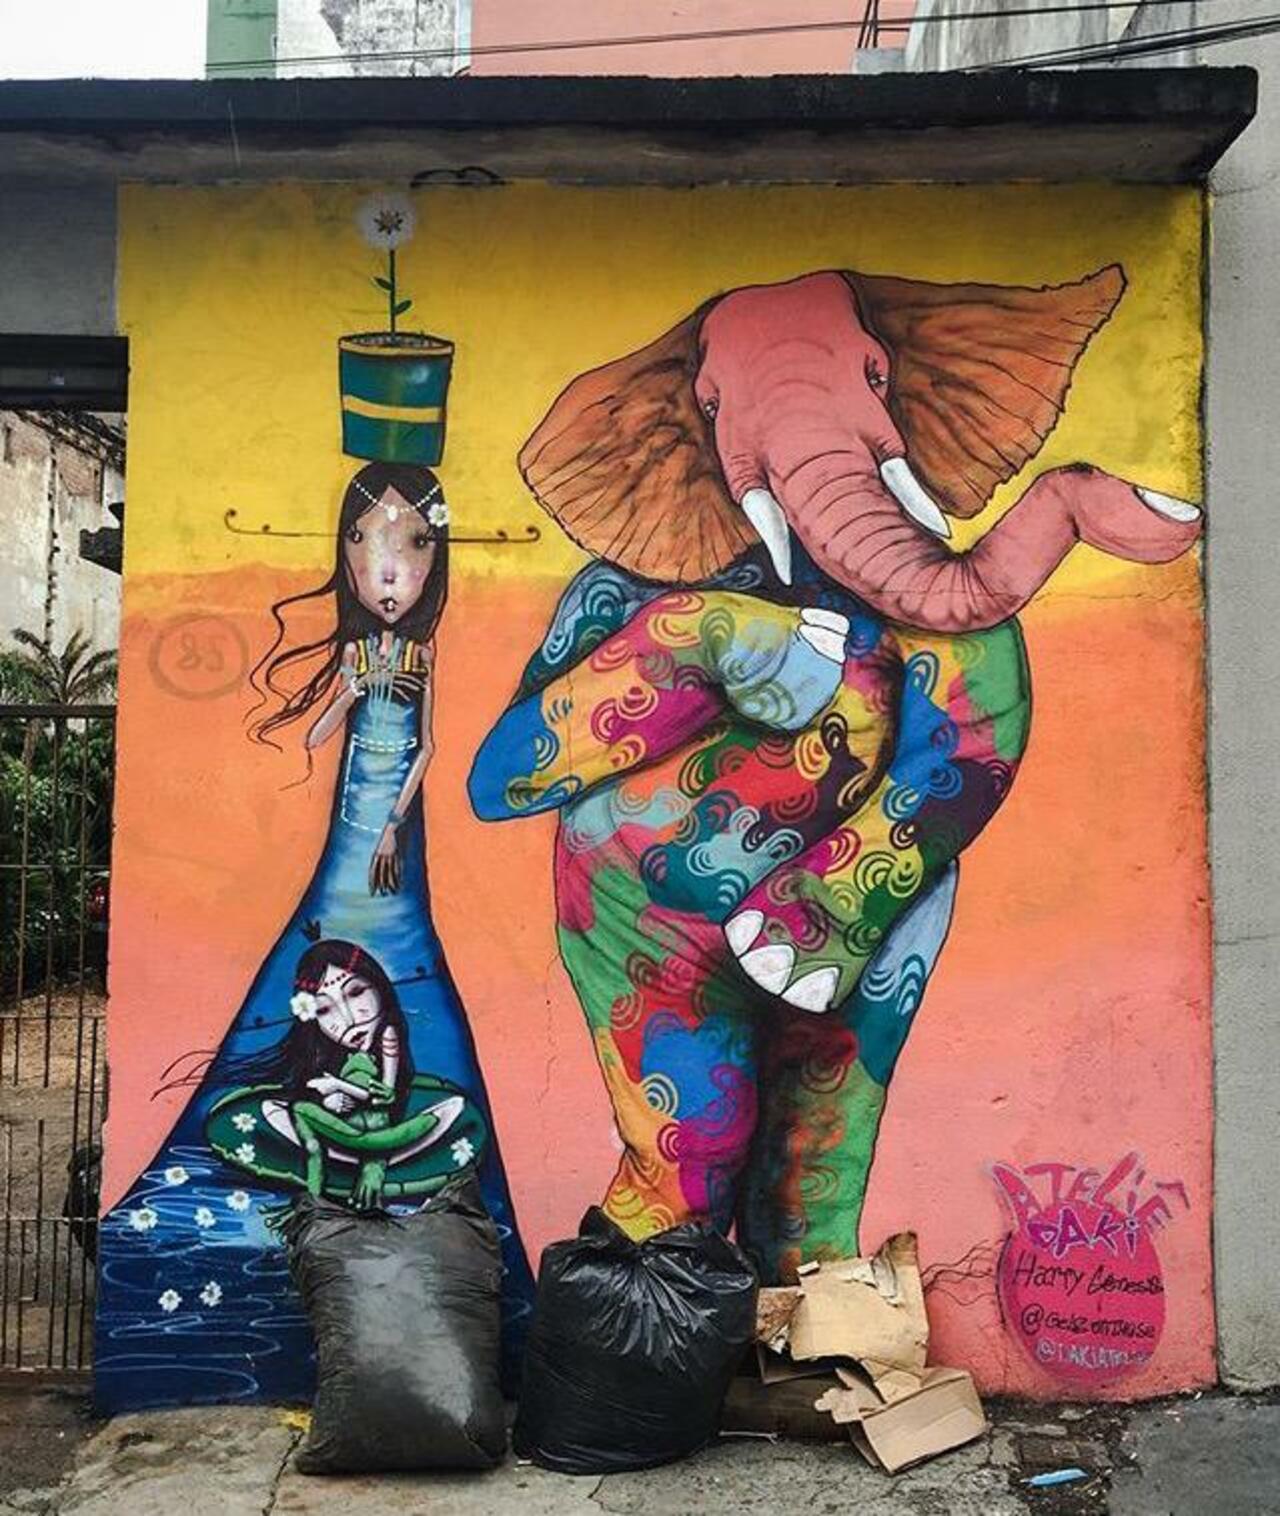 Street Art by Harry Geneis & Gelson in São Paulo #art #mural #graffiti #streetart http://t.co/SlLbhuMZfD … … … …… http://twitter.com/charlesjackso14/status/648021463258275840